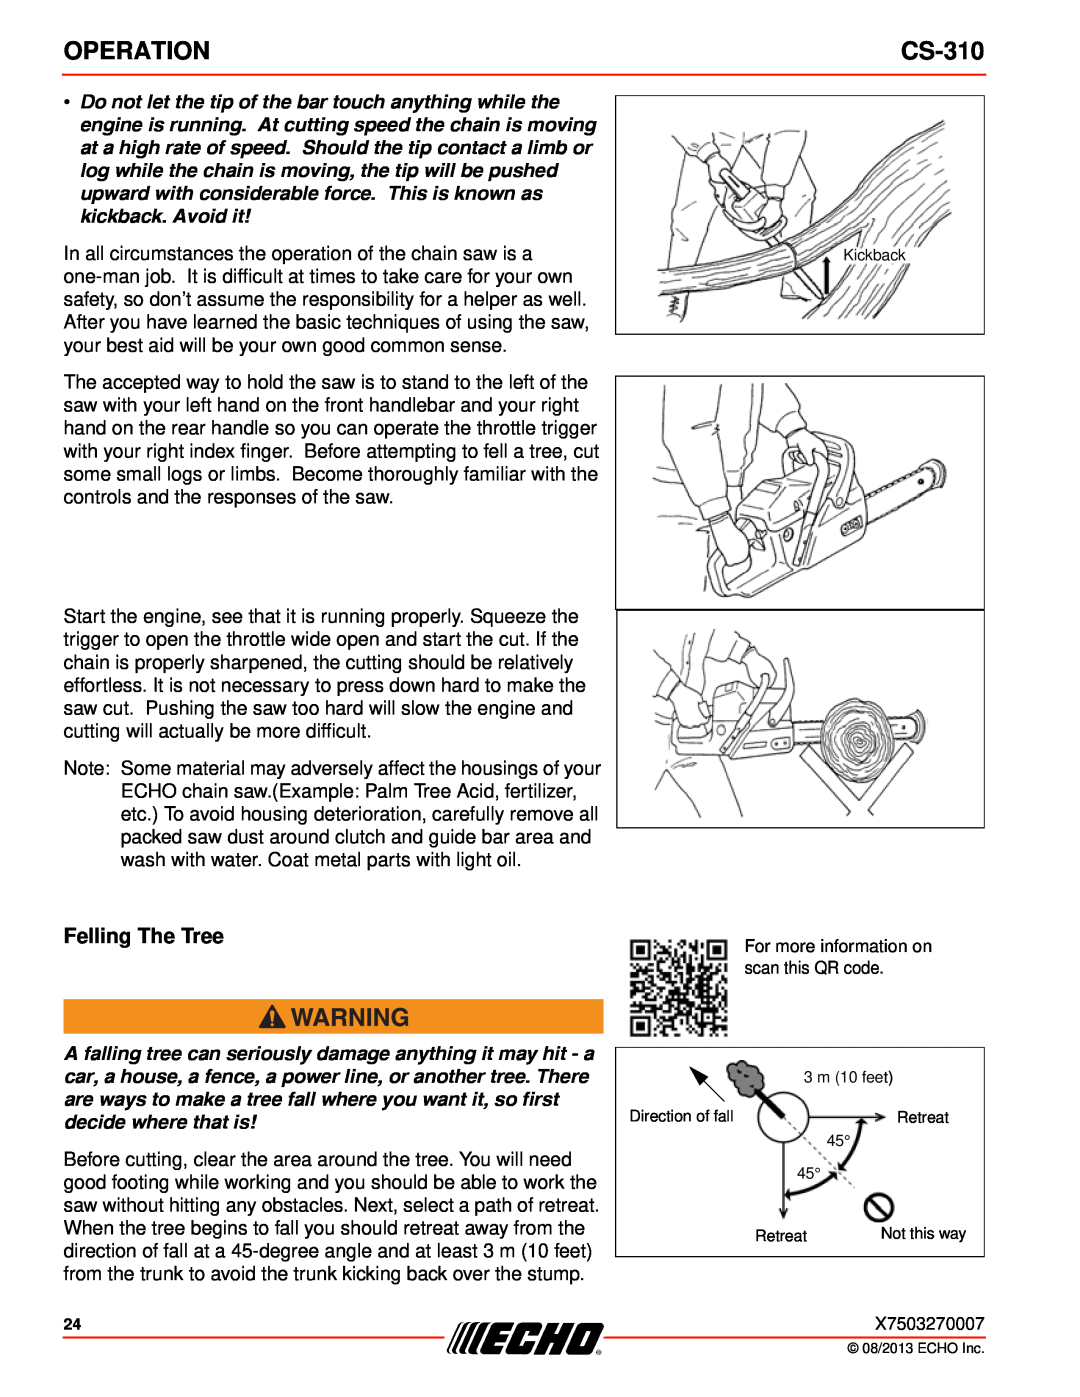 Echo CS-310 instruction manual Felling The Tree, Operation, Kickback, 3 m 10 feet, Direction of fall, Retreat 